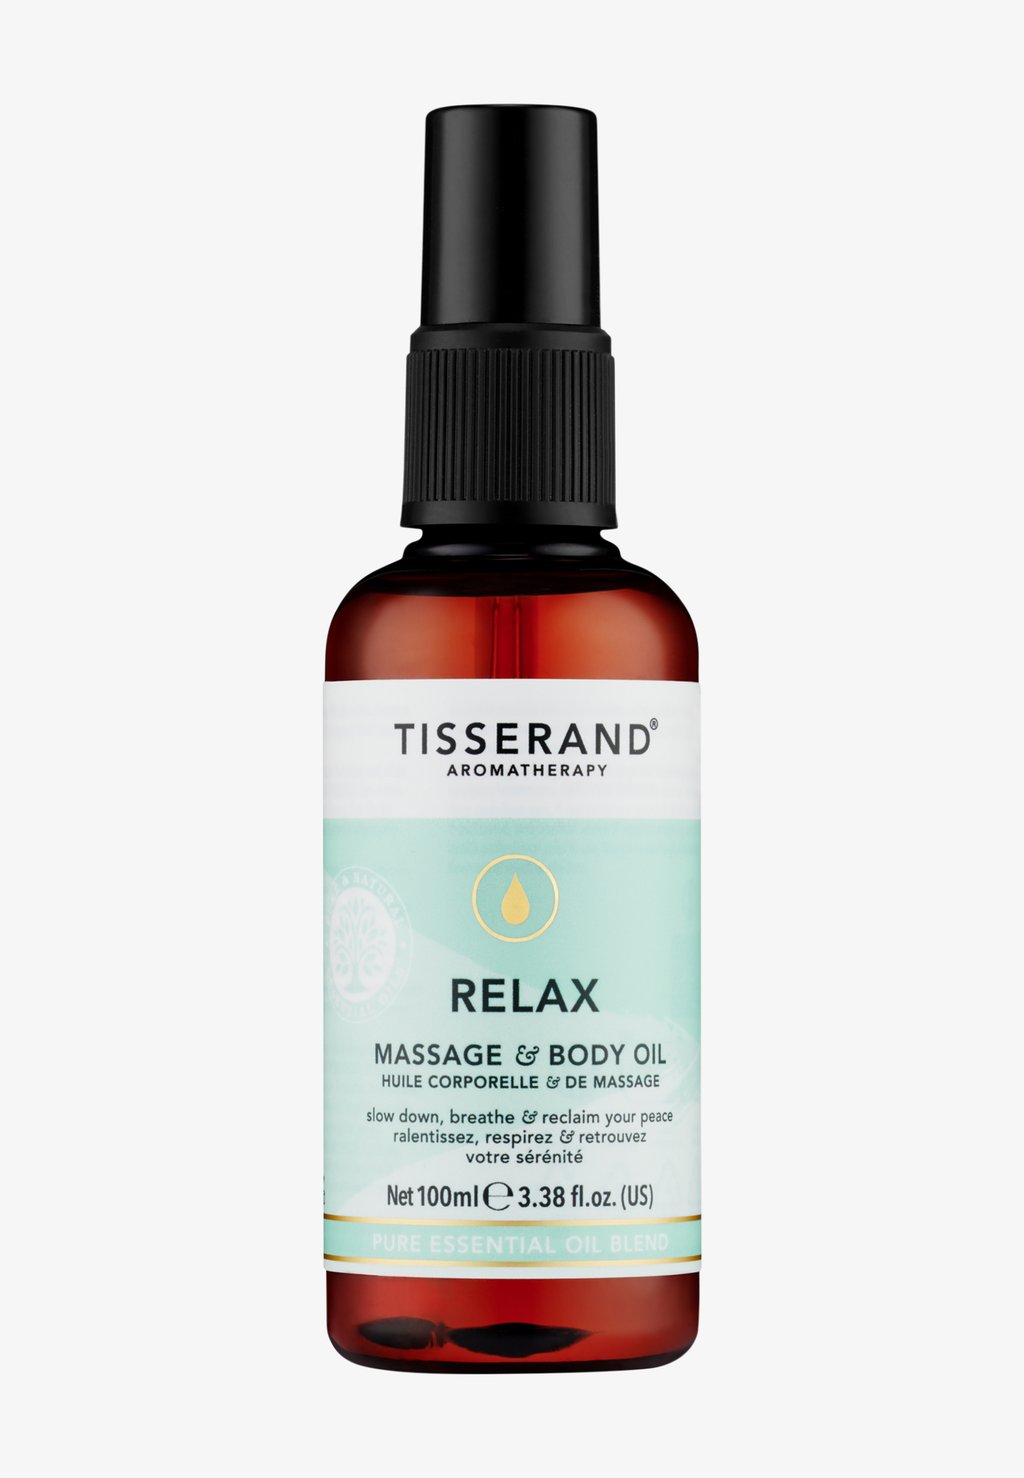 Масло для тела Relax Massage & Body Oil Tisserand Aromatherapy массажное масло для тела 100% natural body oil aromatherapy body relax масло 1000мл